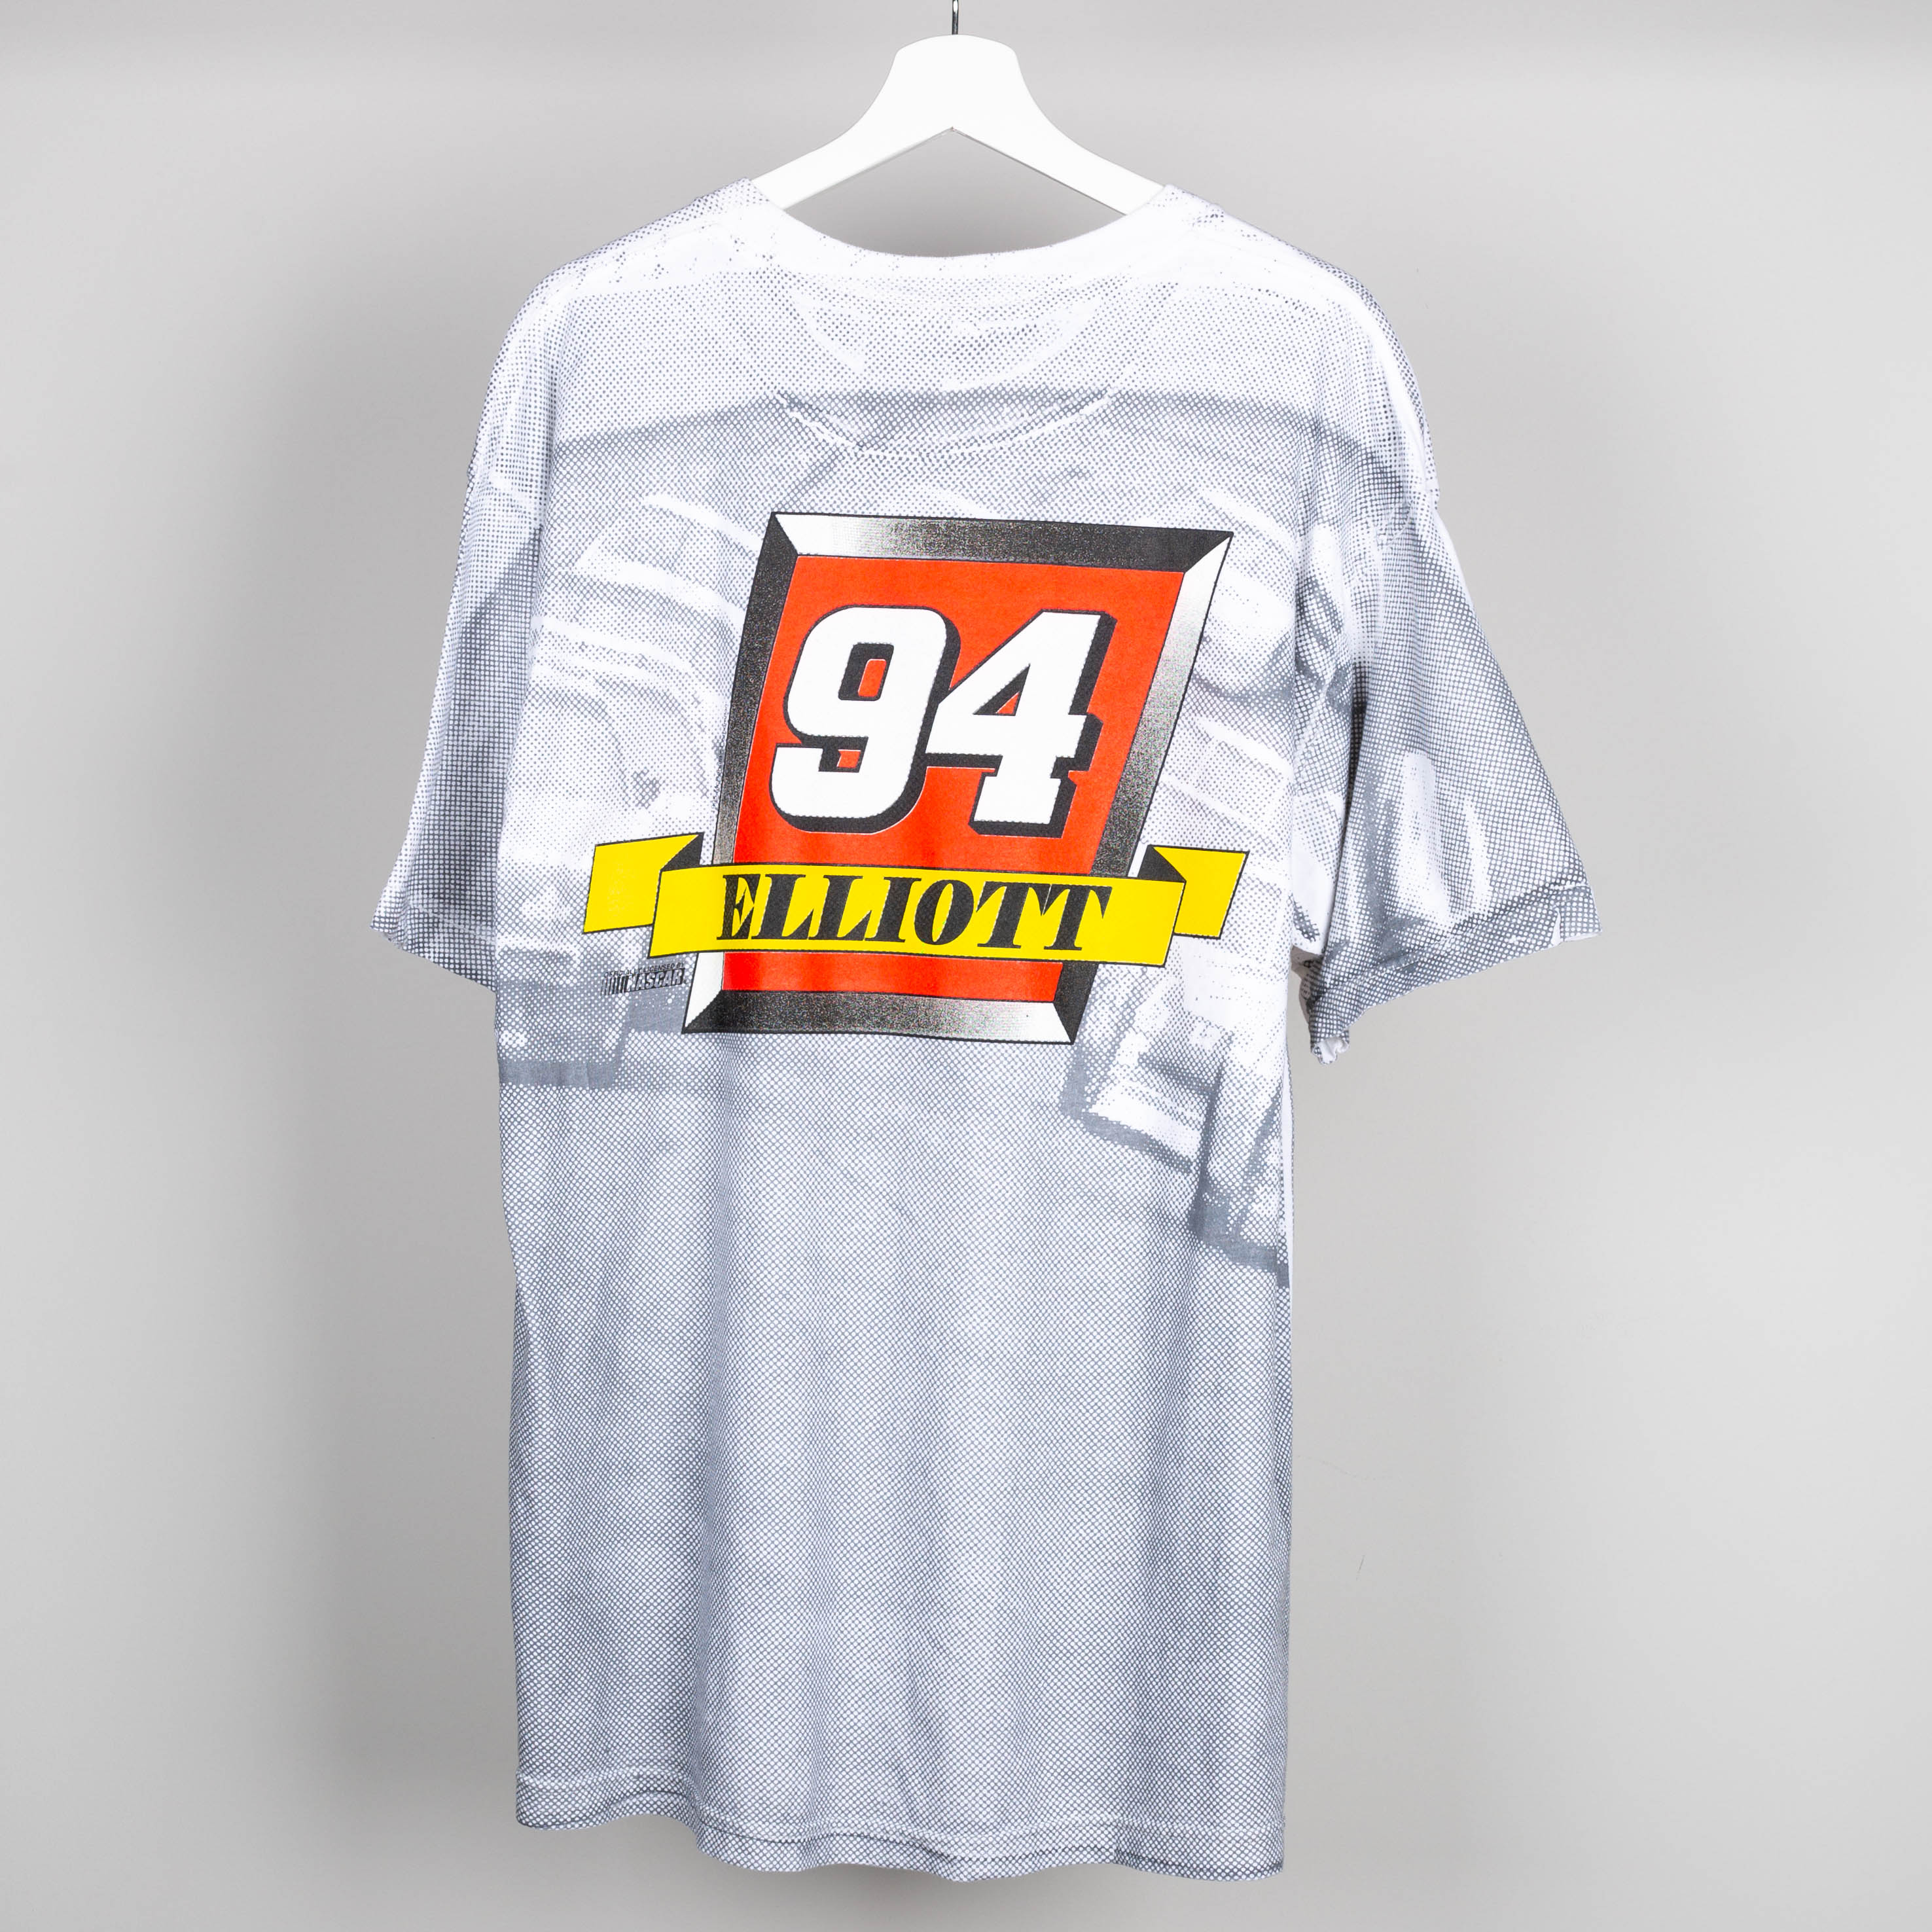 1995 Bill Elliot Mcdonalds Racing Nascar T-Shirt Size L